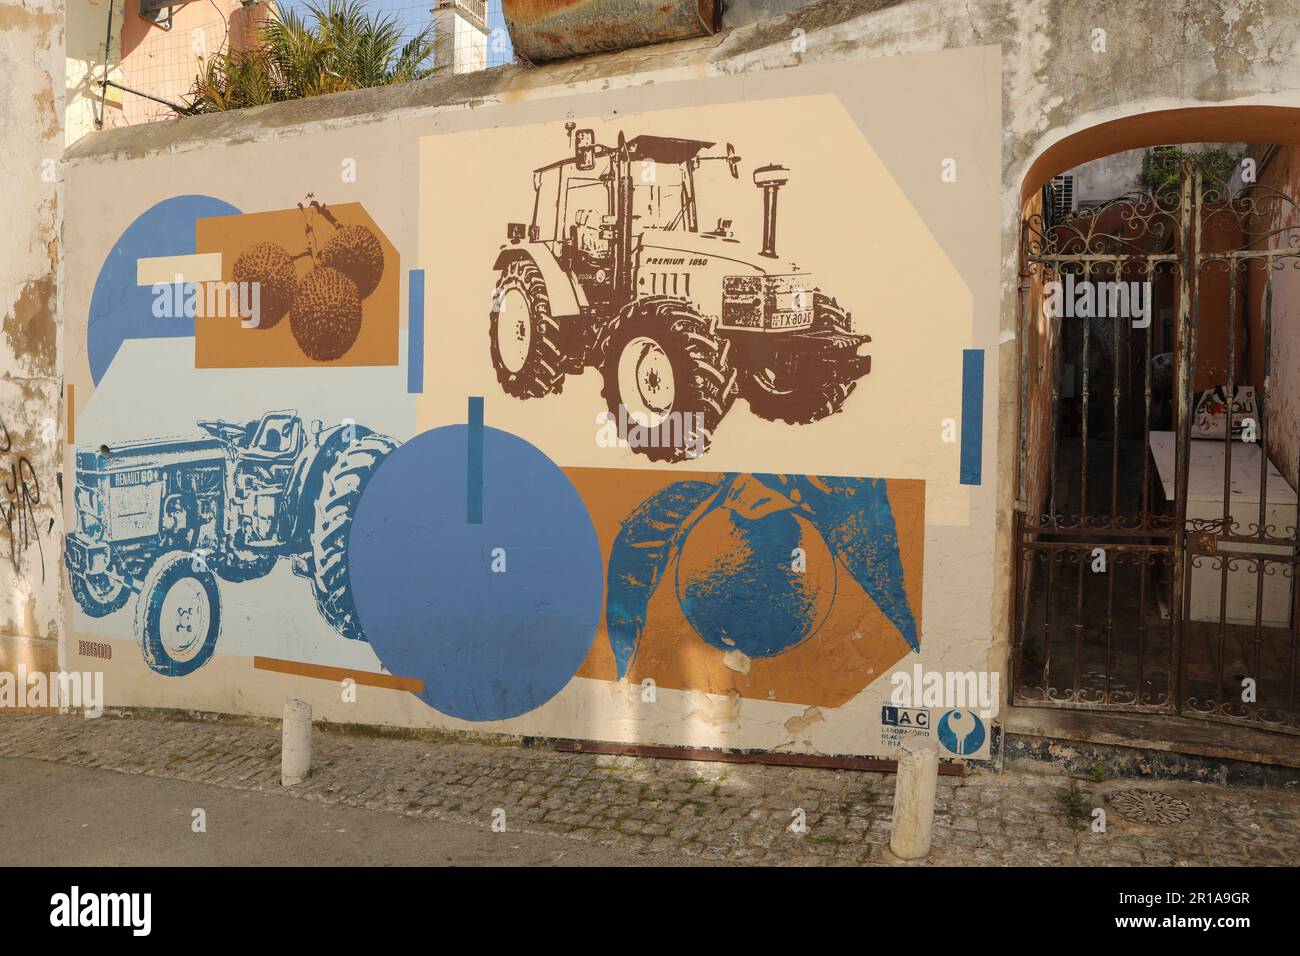 Street art graffiti on a wall, Old Town Lagos, Algarve, Portugal Stock Photo